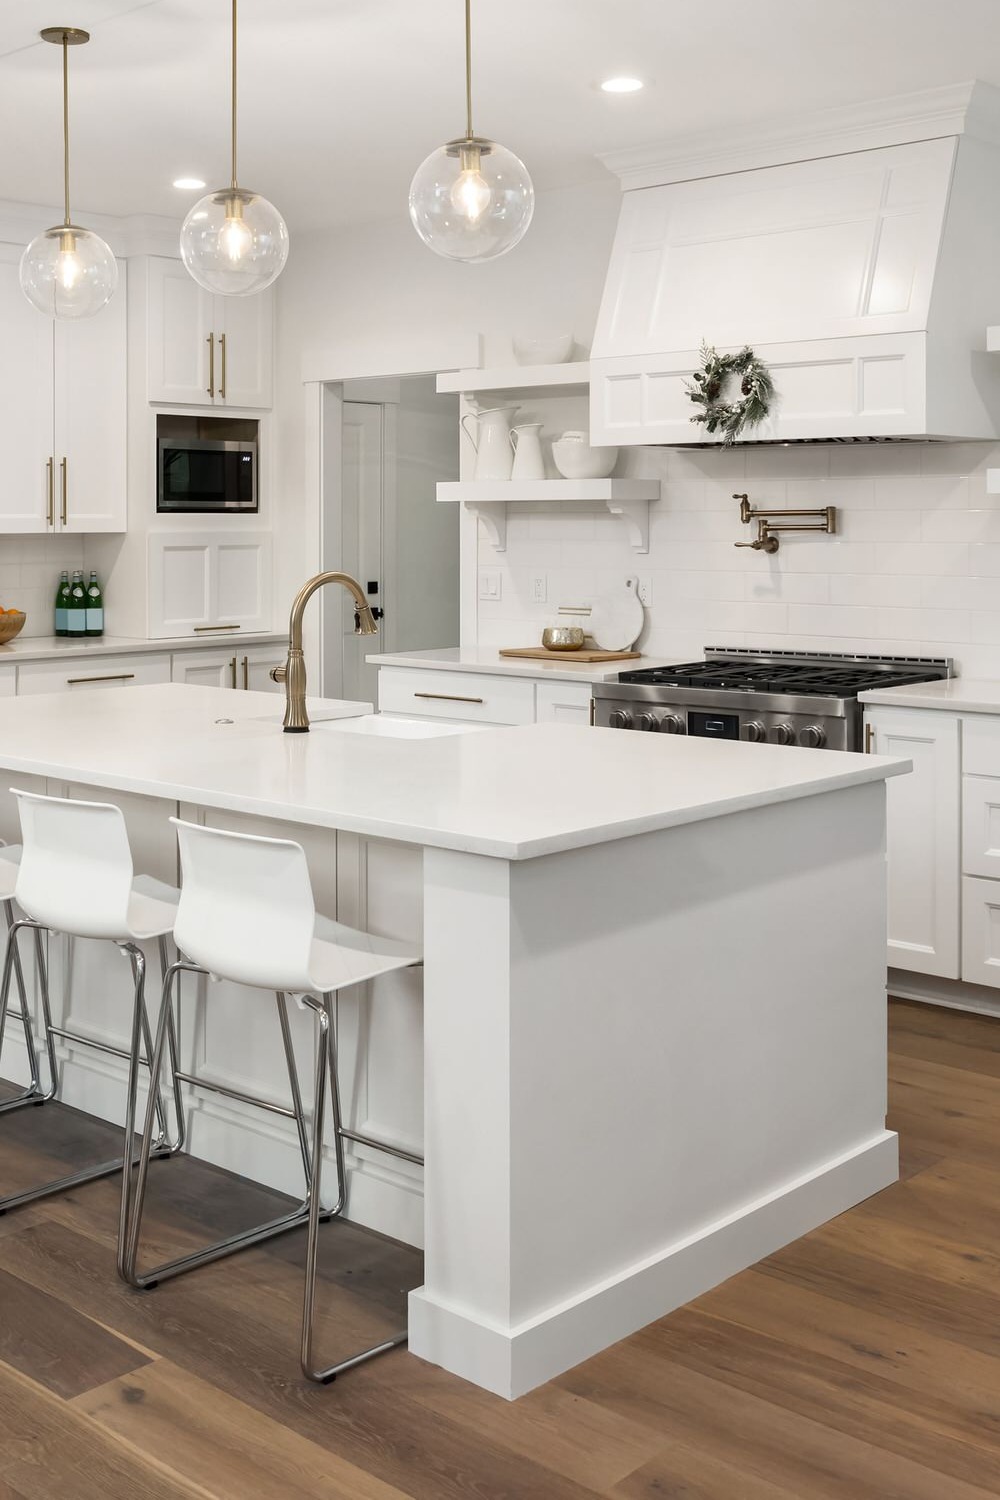 Modern Tile White Marble Look Hardwood Floors Room Clean Want Make Warm Add Feel